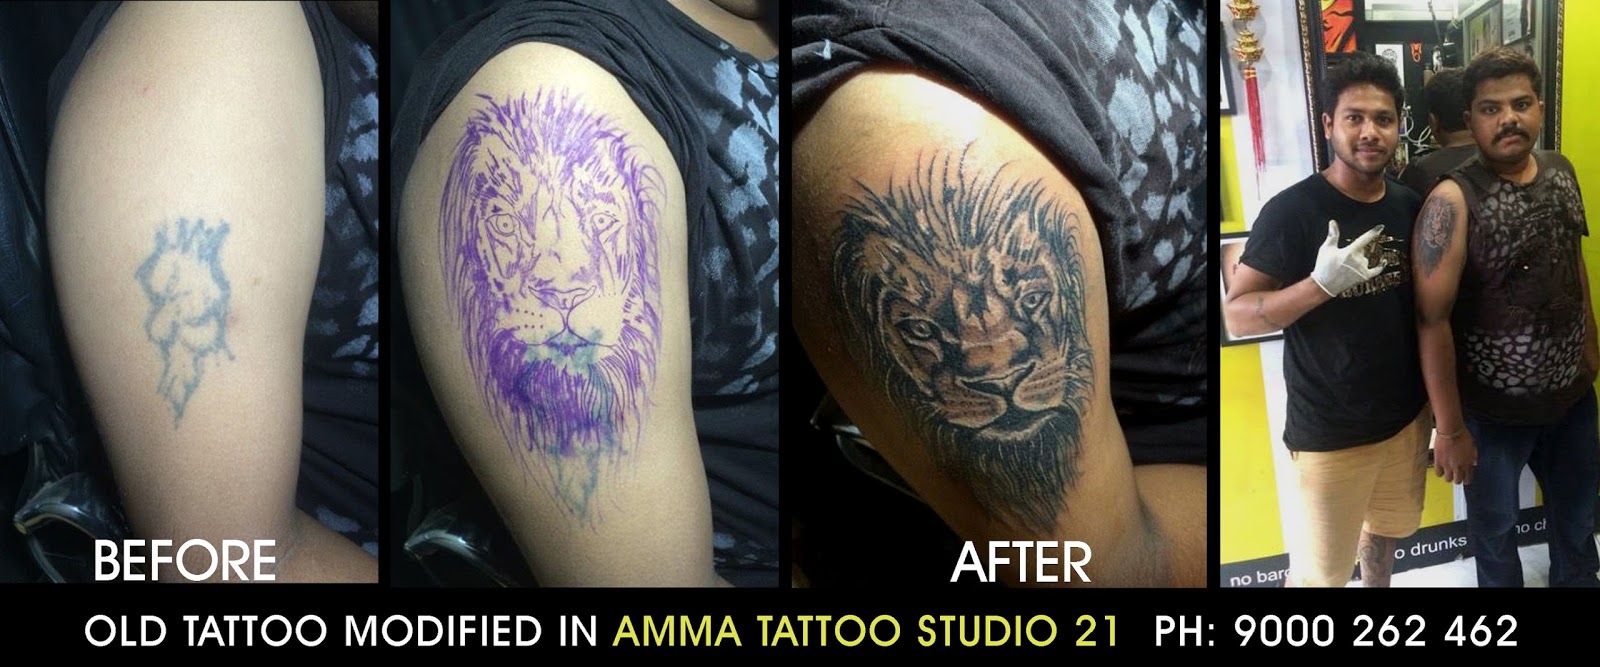 lordshivatattoo in amma tattoo... - AMMA Tattoo Studio 21 | Facebook